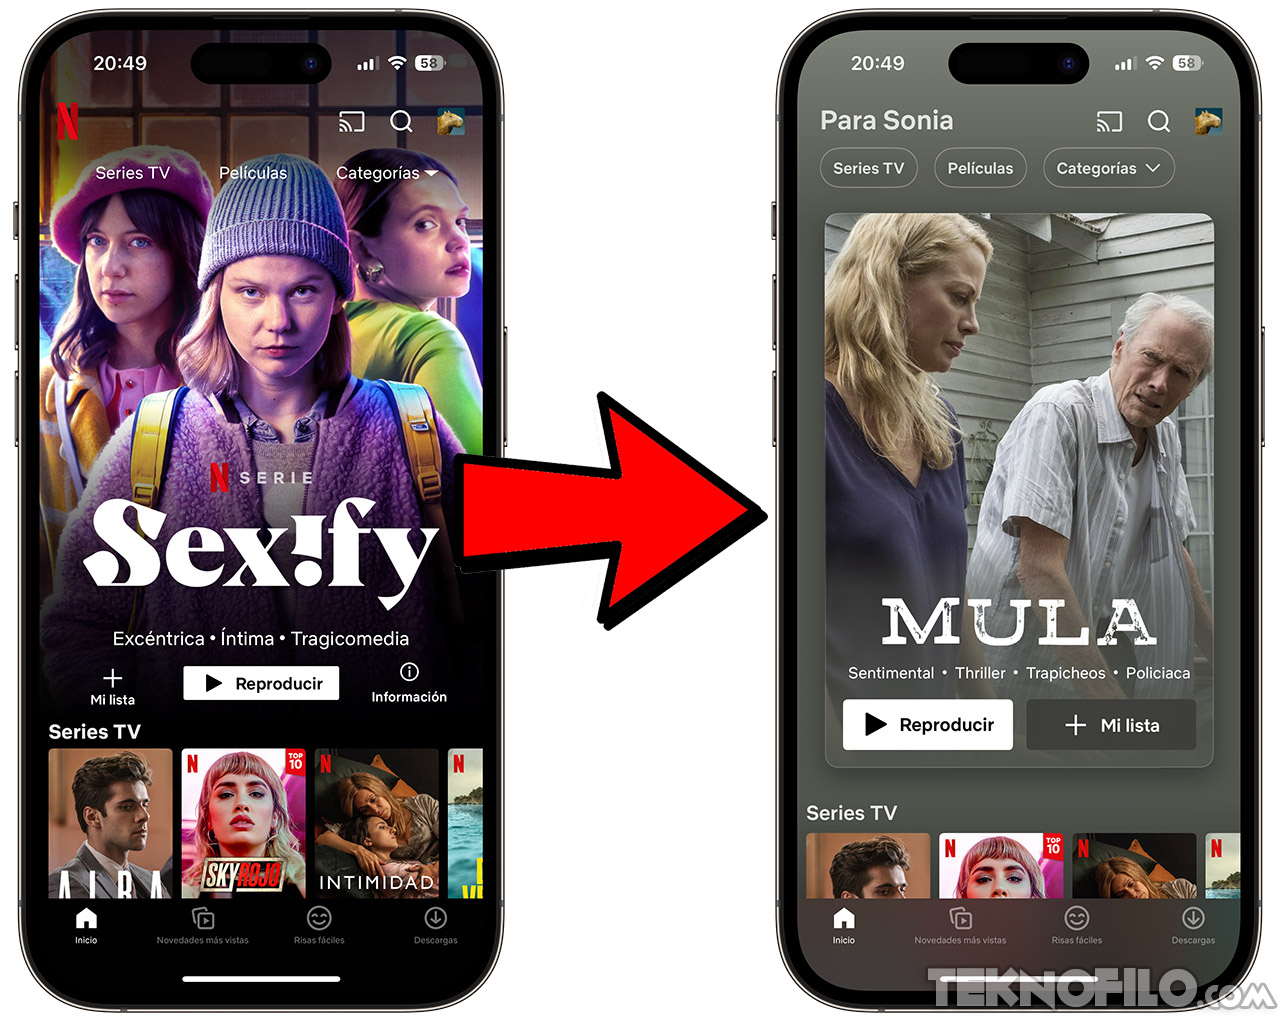 Netflix debuts a new, more fluid design for its iPhone app

